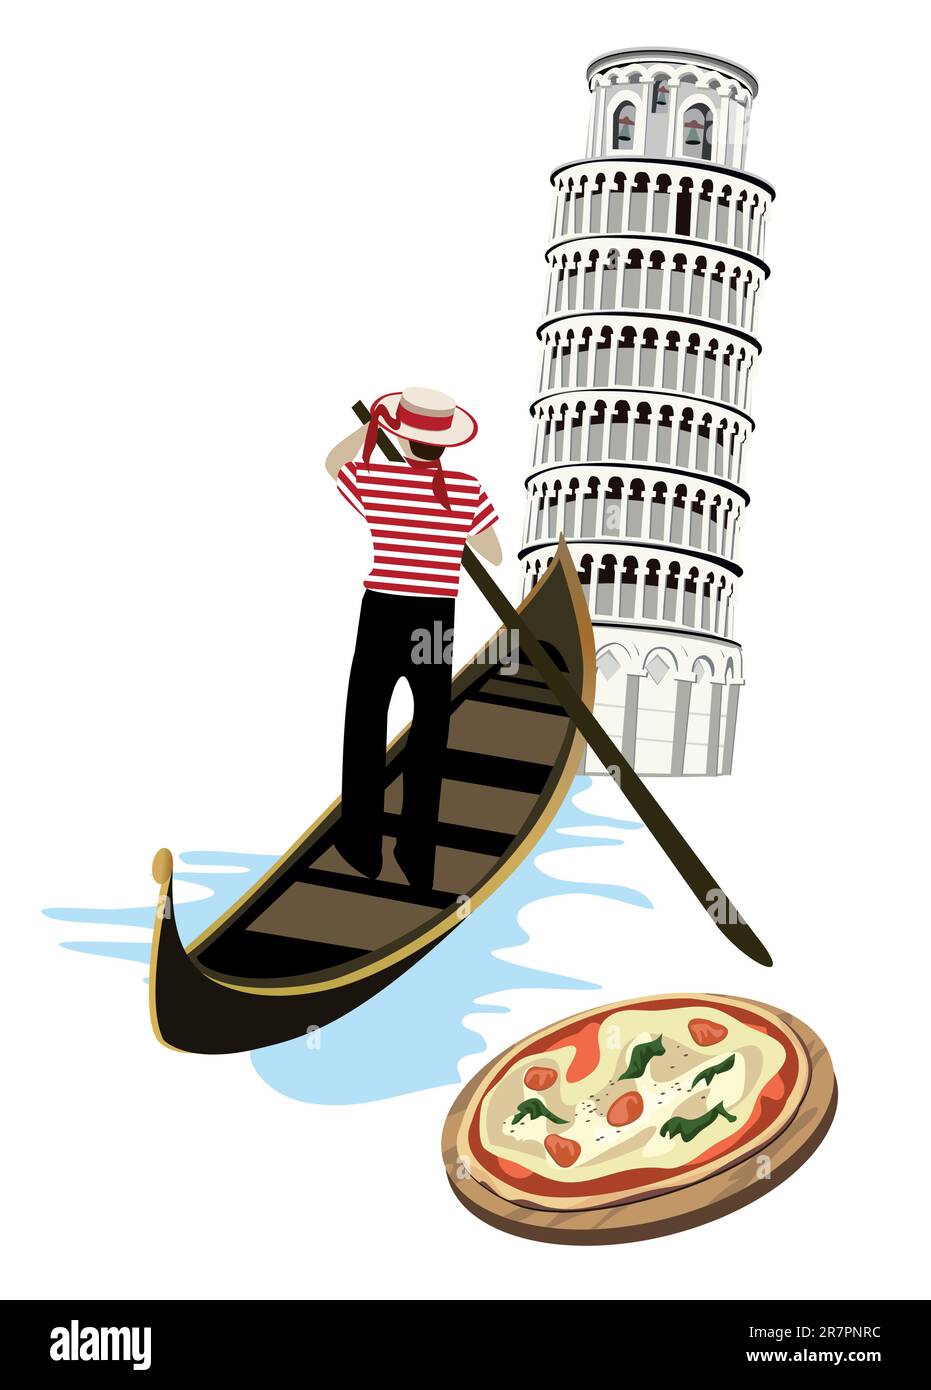 Symbole Italiens wie Pisa-Turm, Pizza und Gondel Stock Vektor